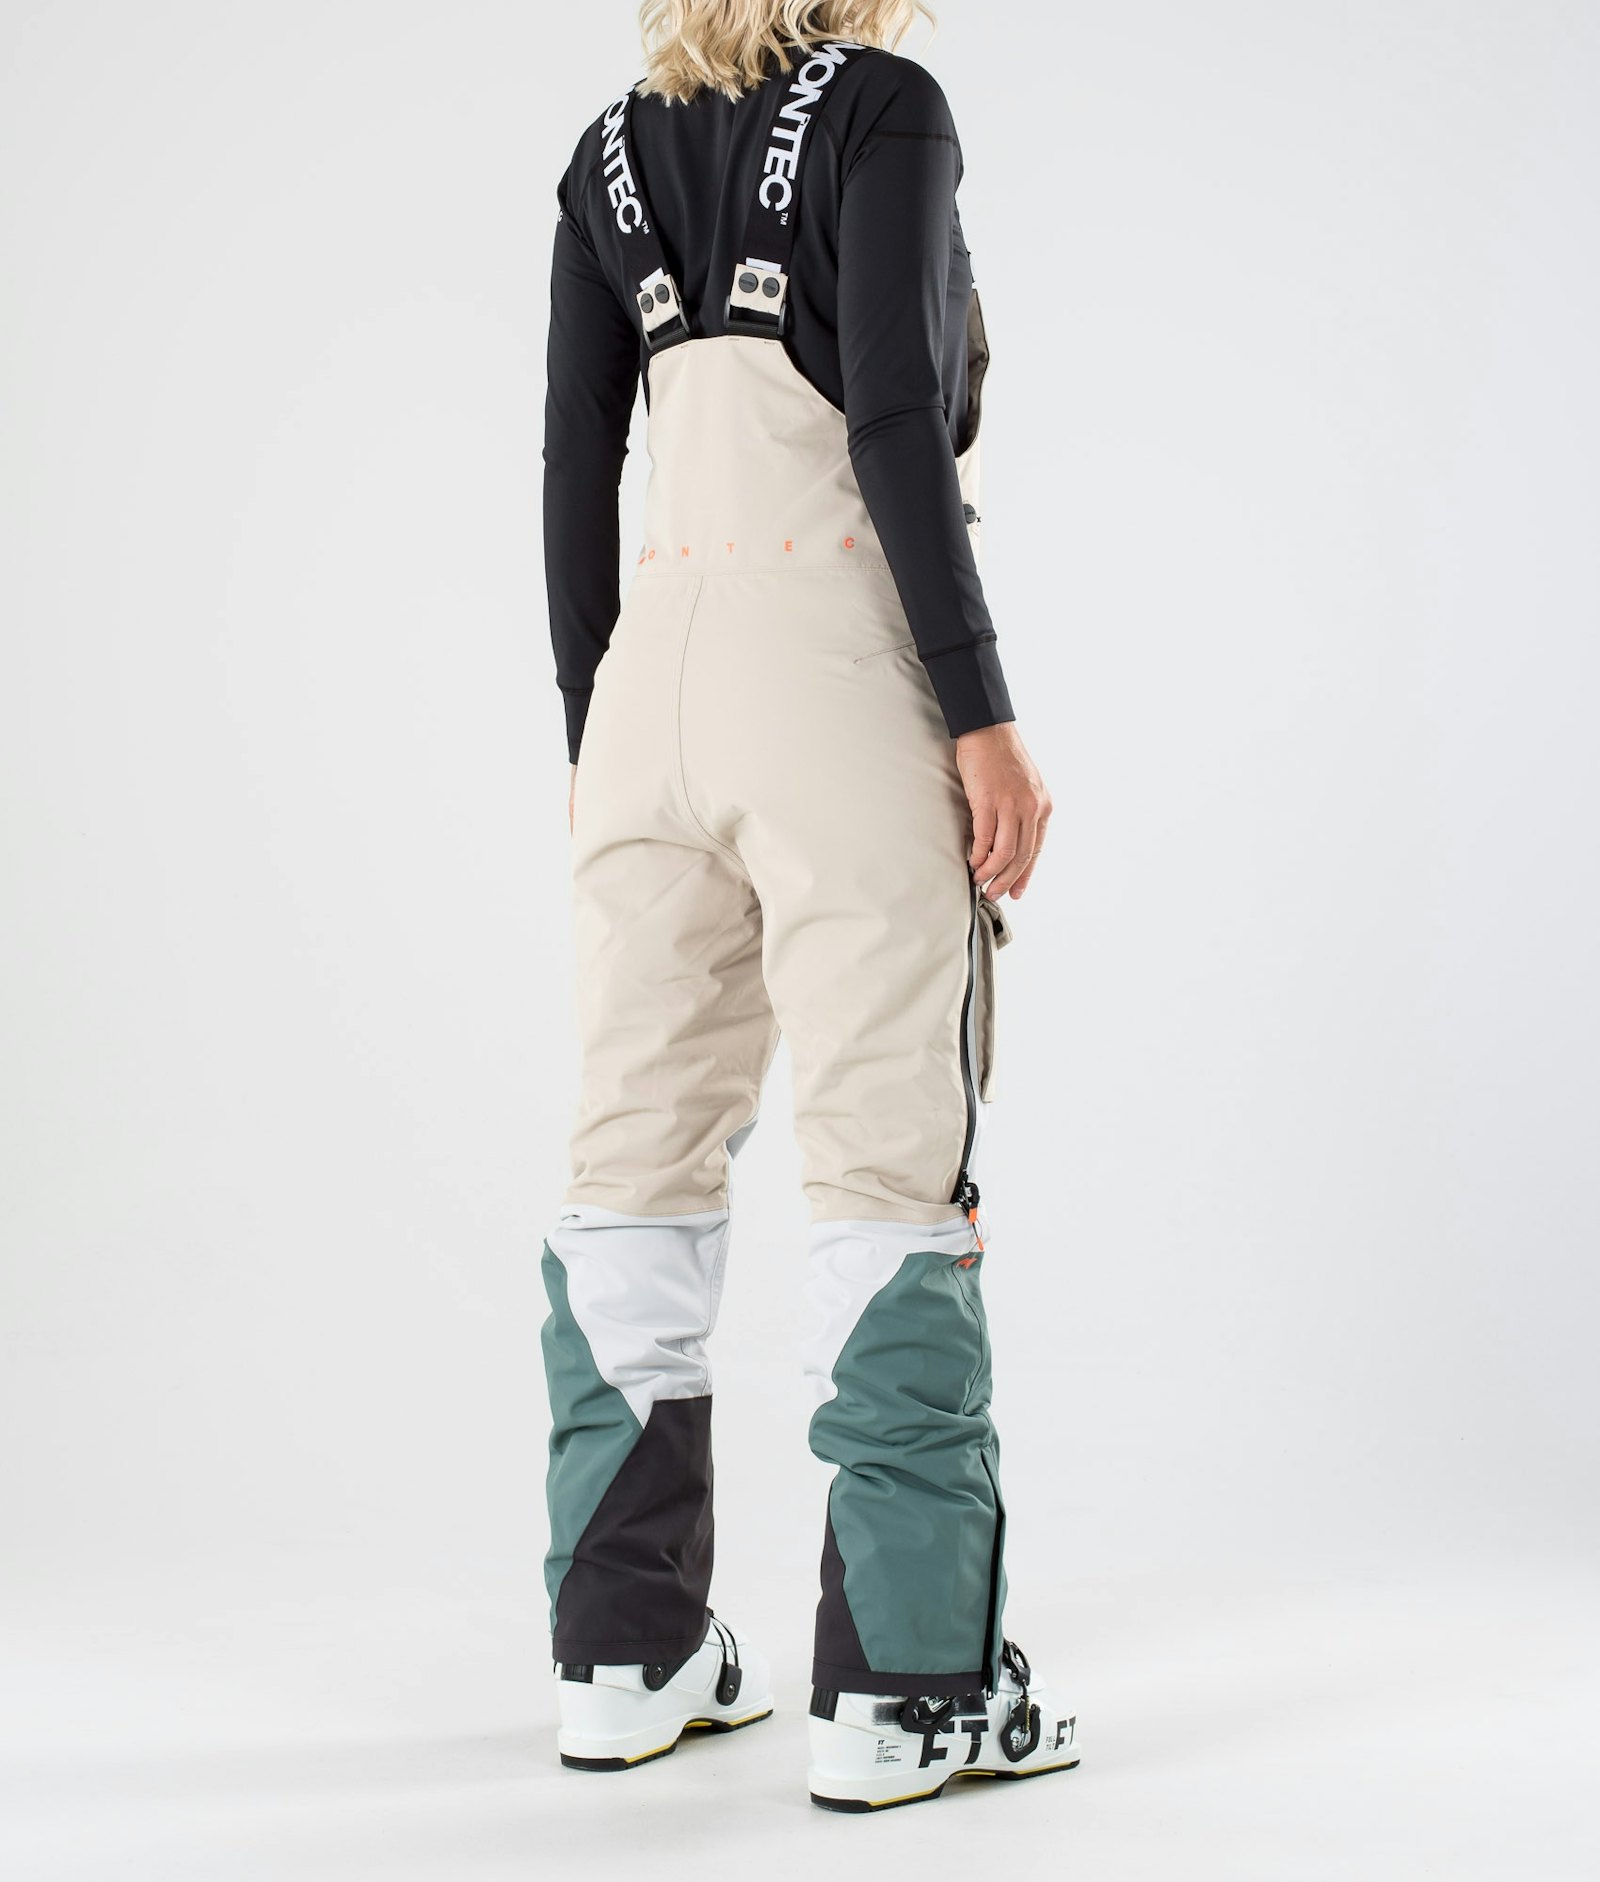 Fawk W 2019 Pantalon de Ski Femme Desert/Light Grey/Atlantic